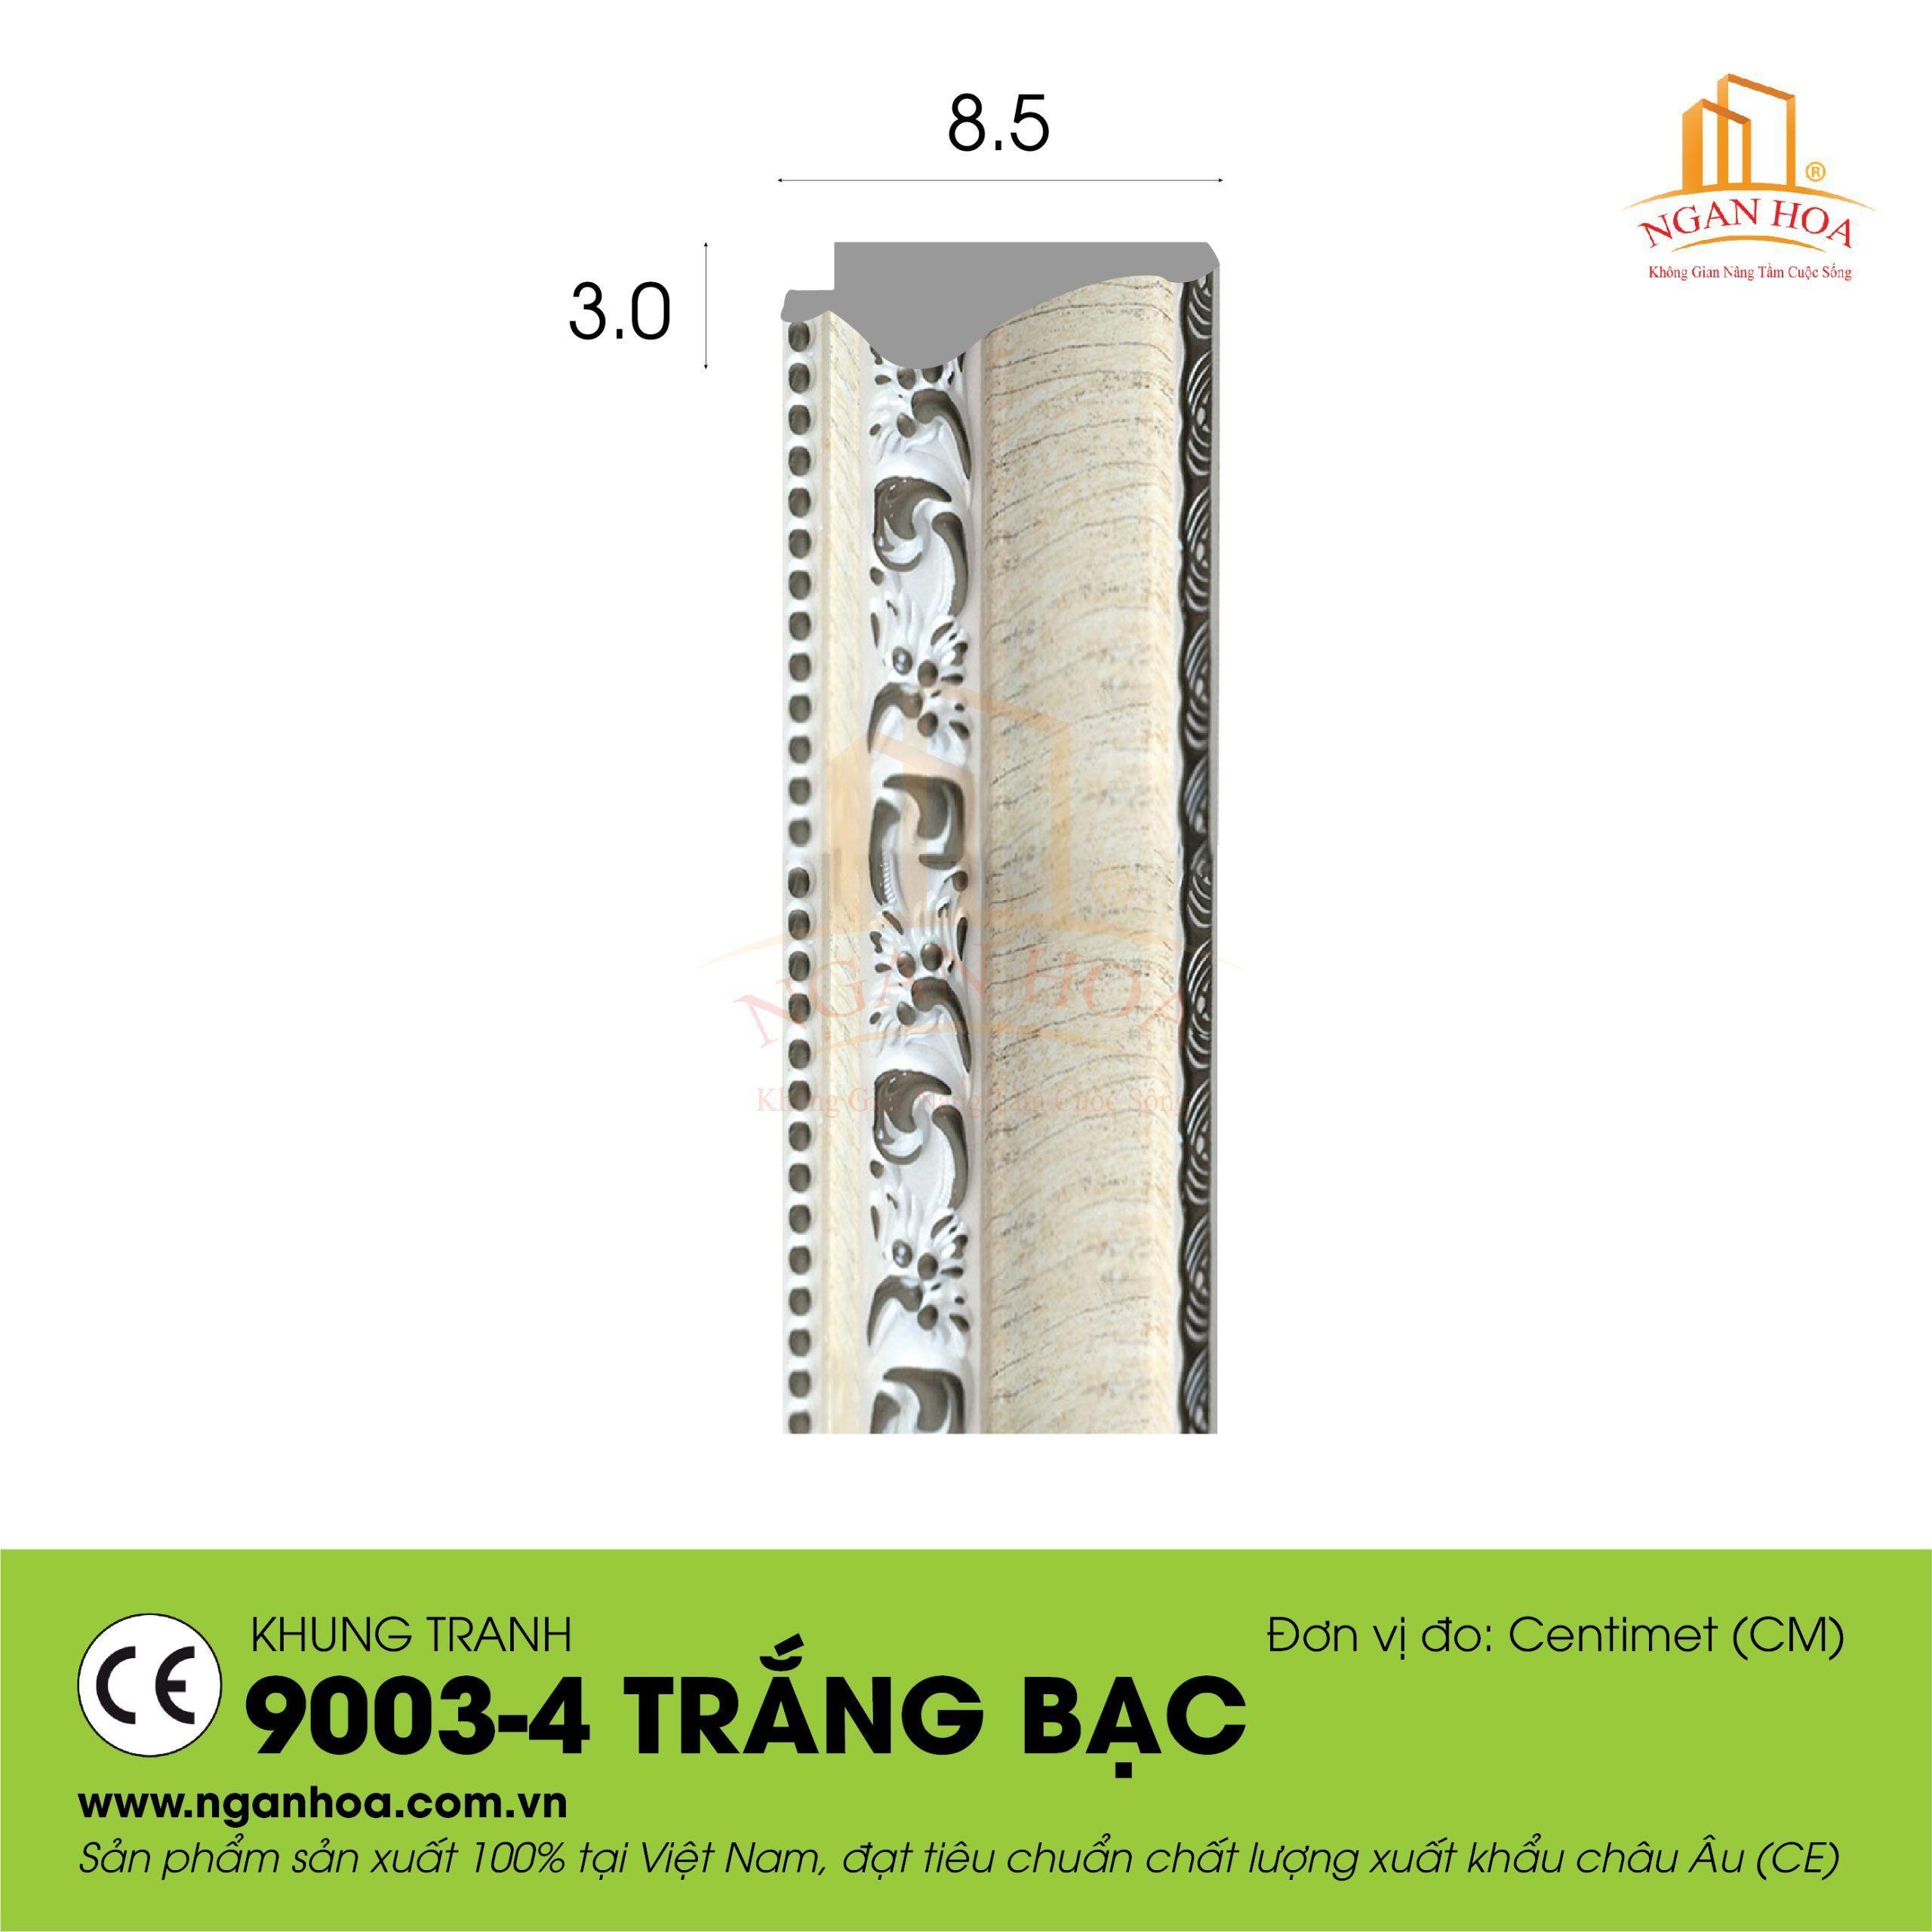 KT 9003 4 Trang Bac scaled